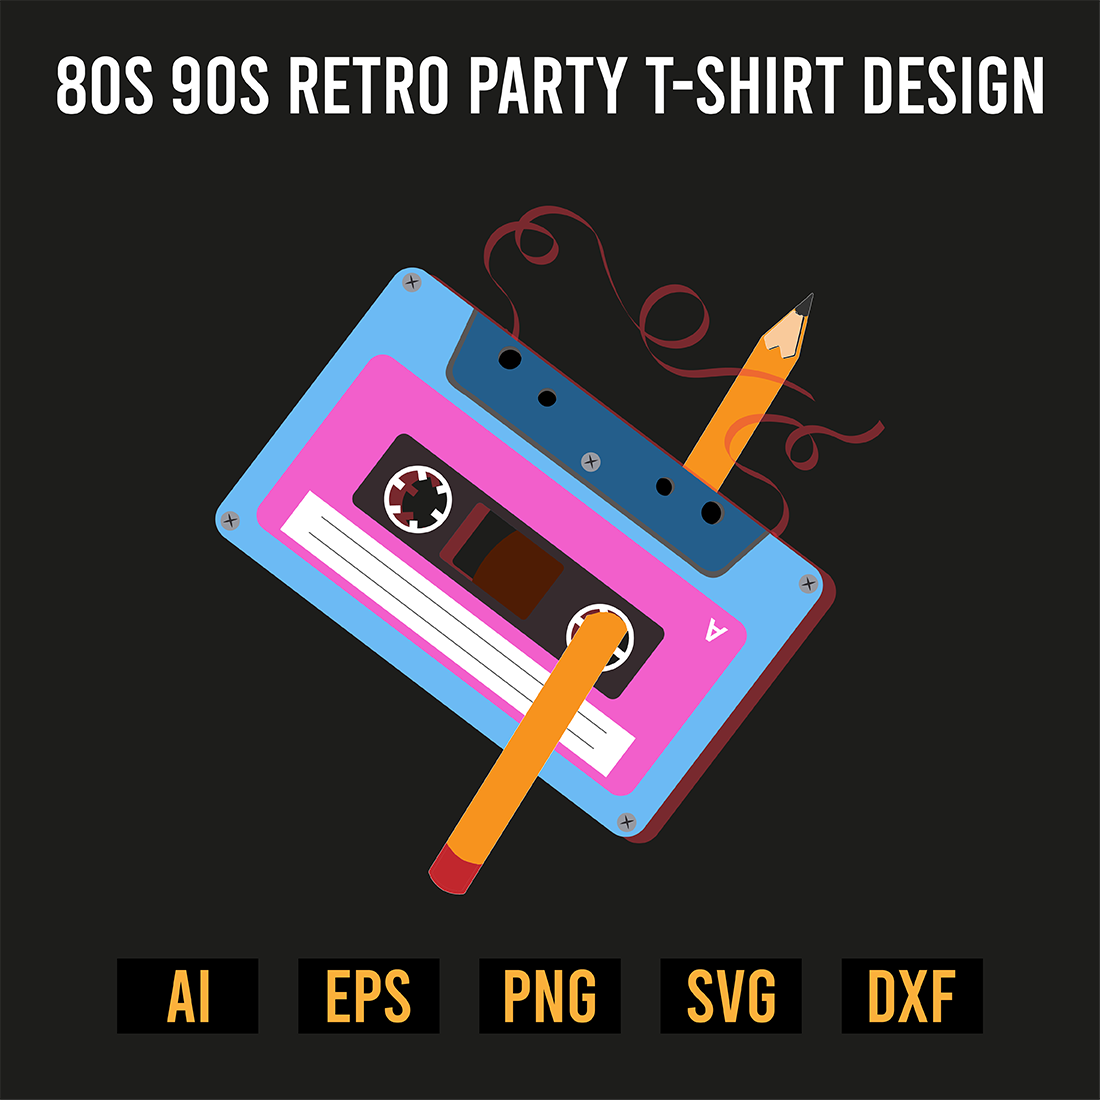 80s 90s Retro Party T-Shirt Design preview image.